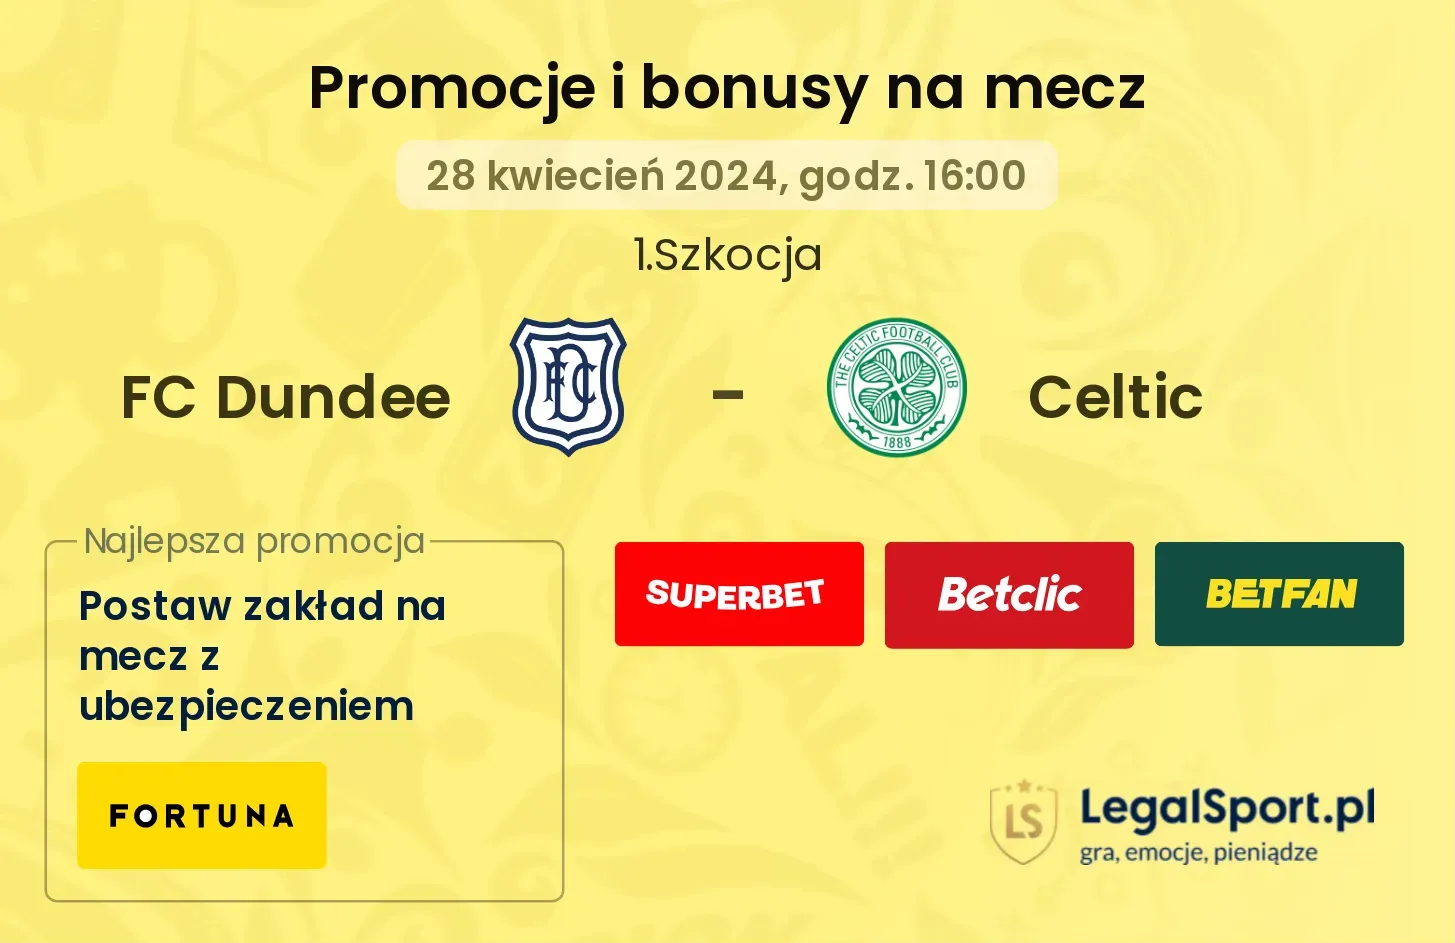 FC Dundee - Celtic promocje bonusy na mecz